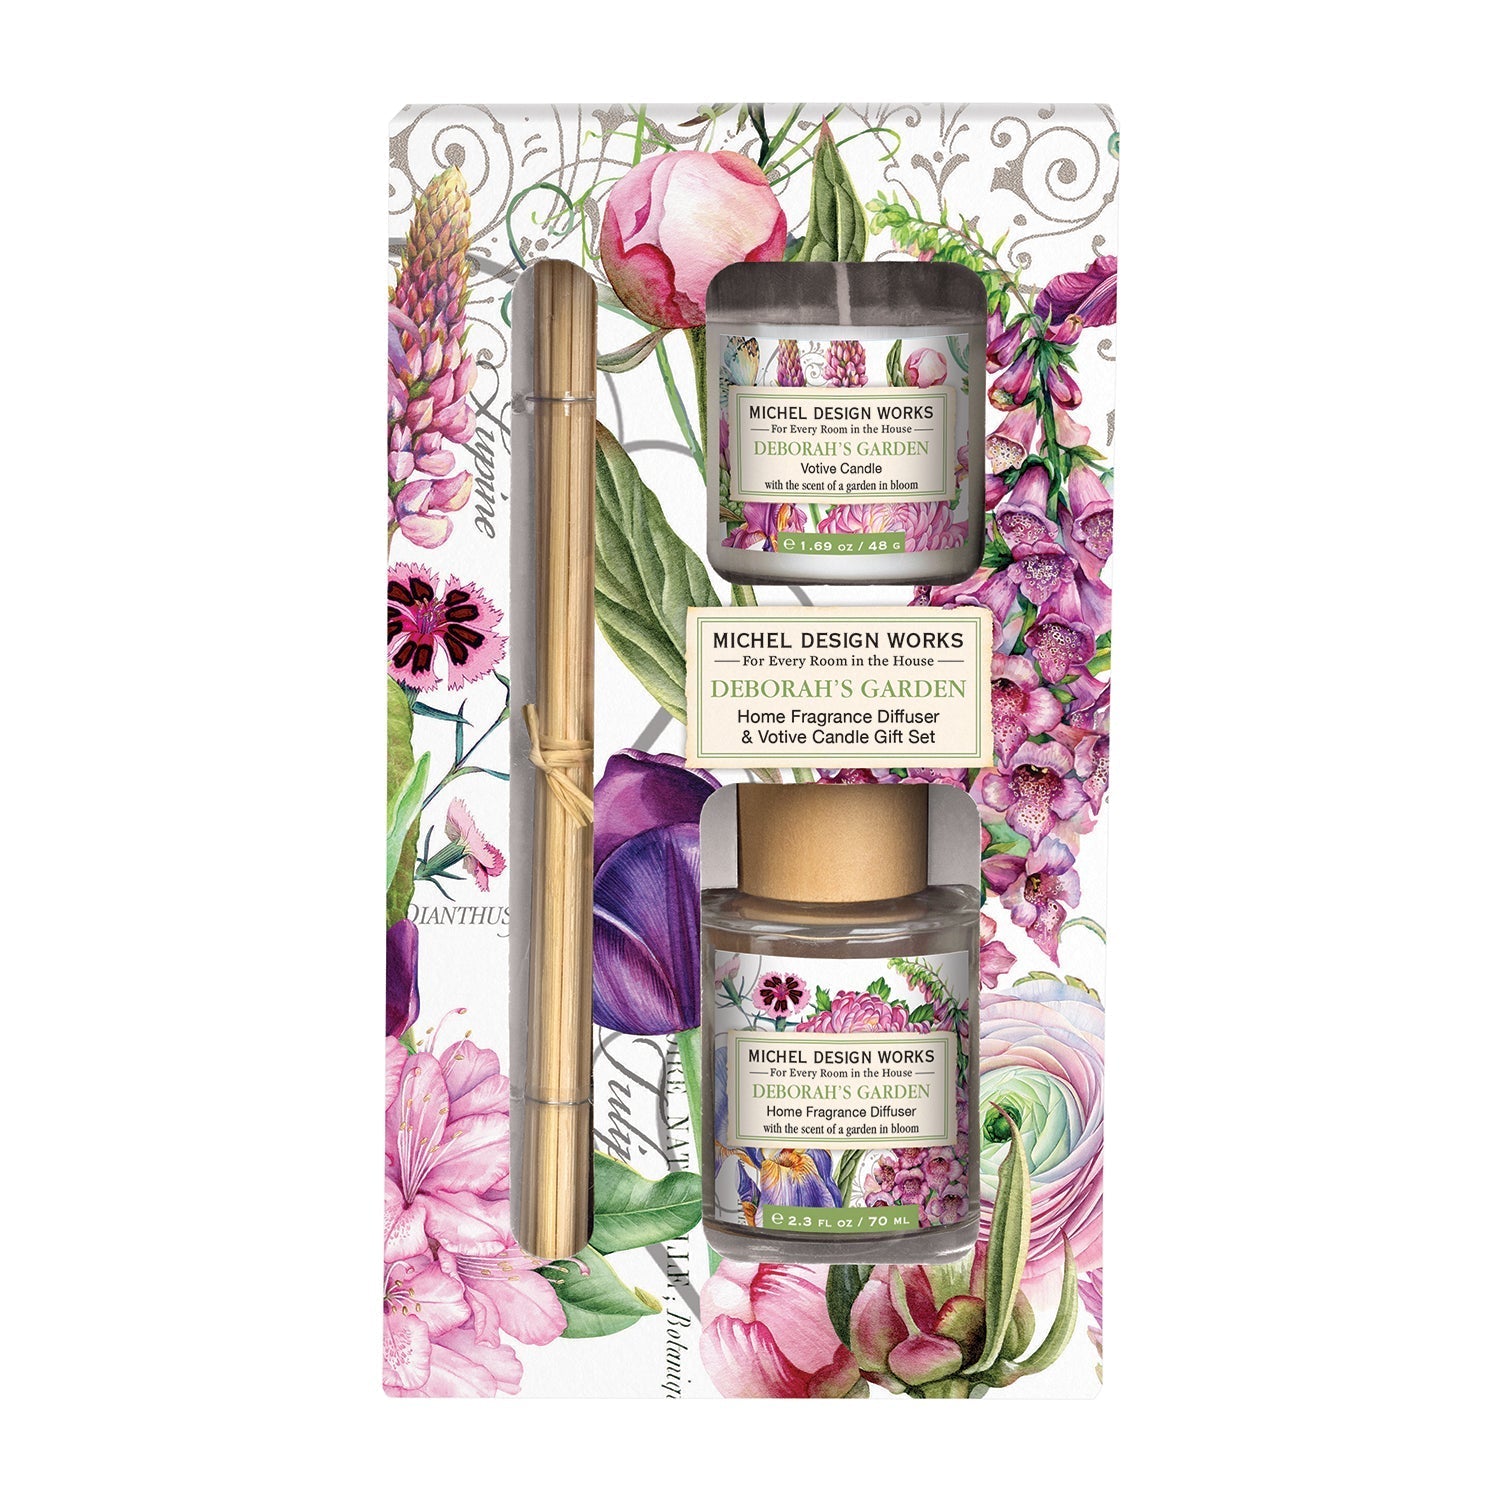 Deborah's Garden Home Fragrance Diffuser & Votive Candle Gift Set    